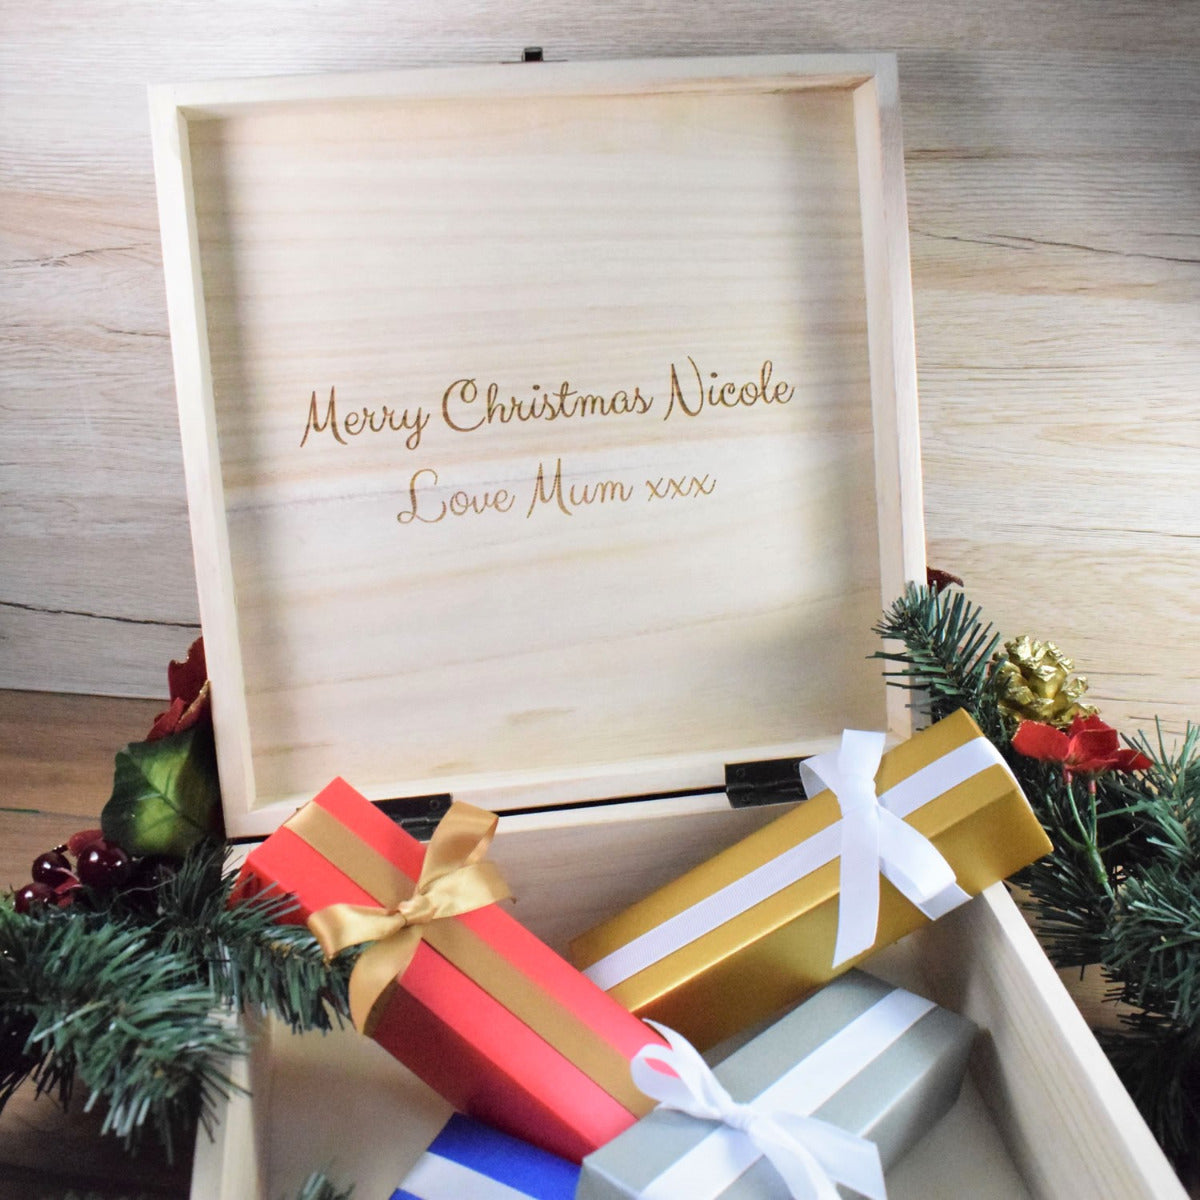 Personalised Printed Wooden Christmas Eve Box - Santa